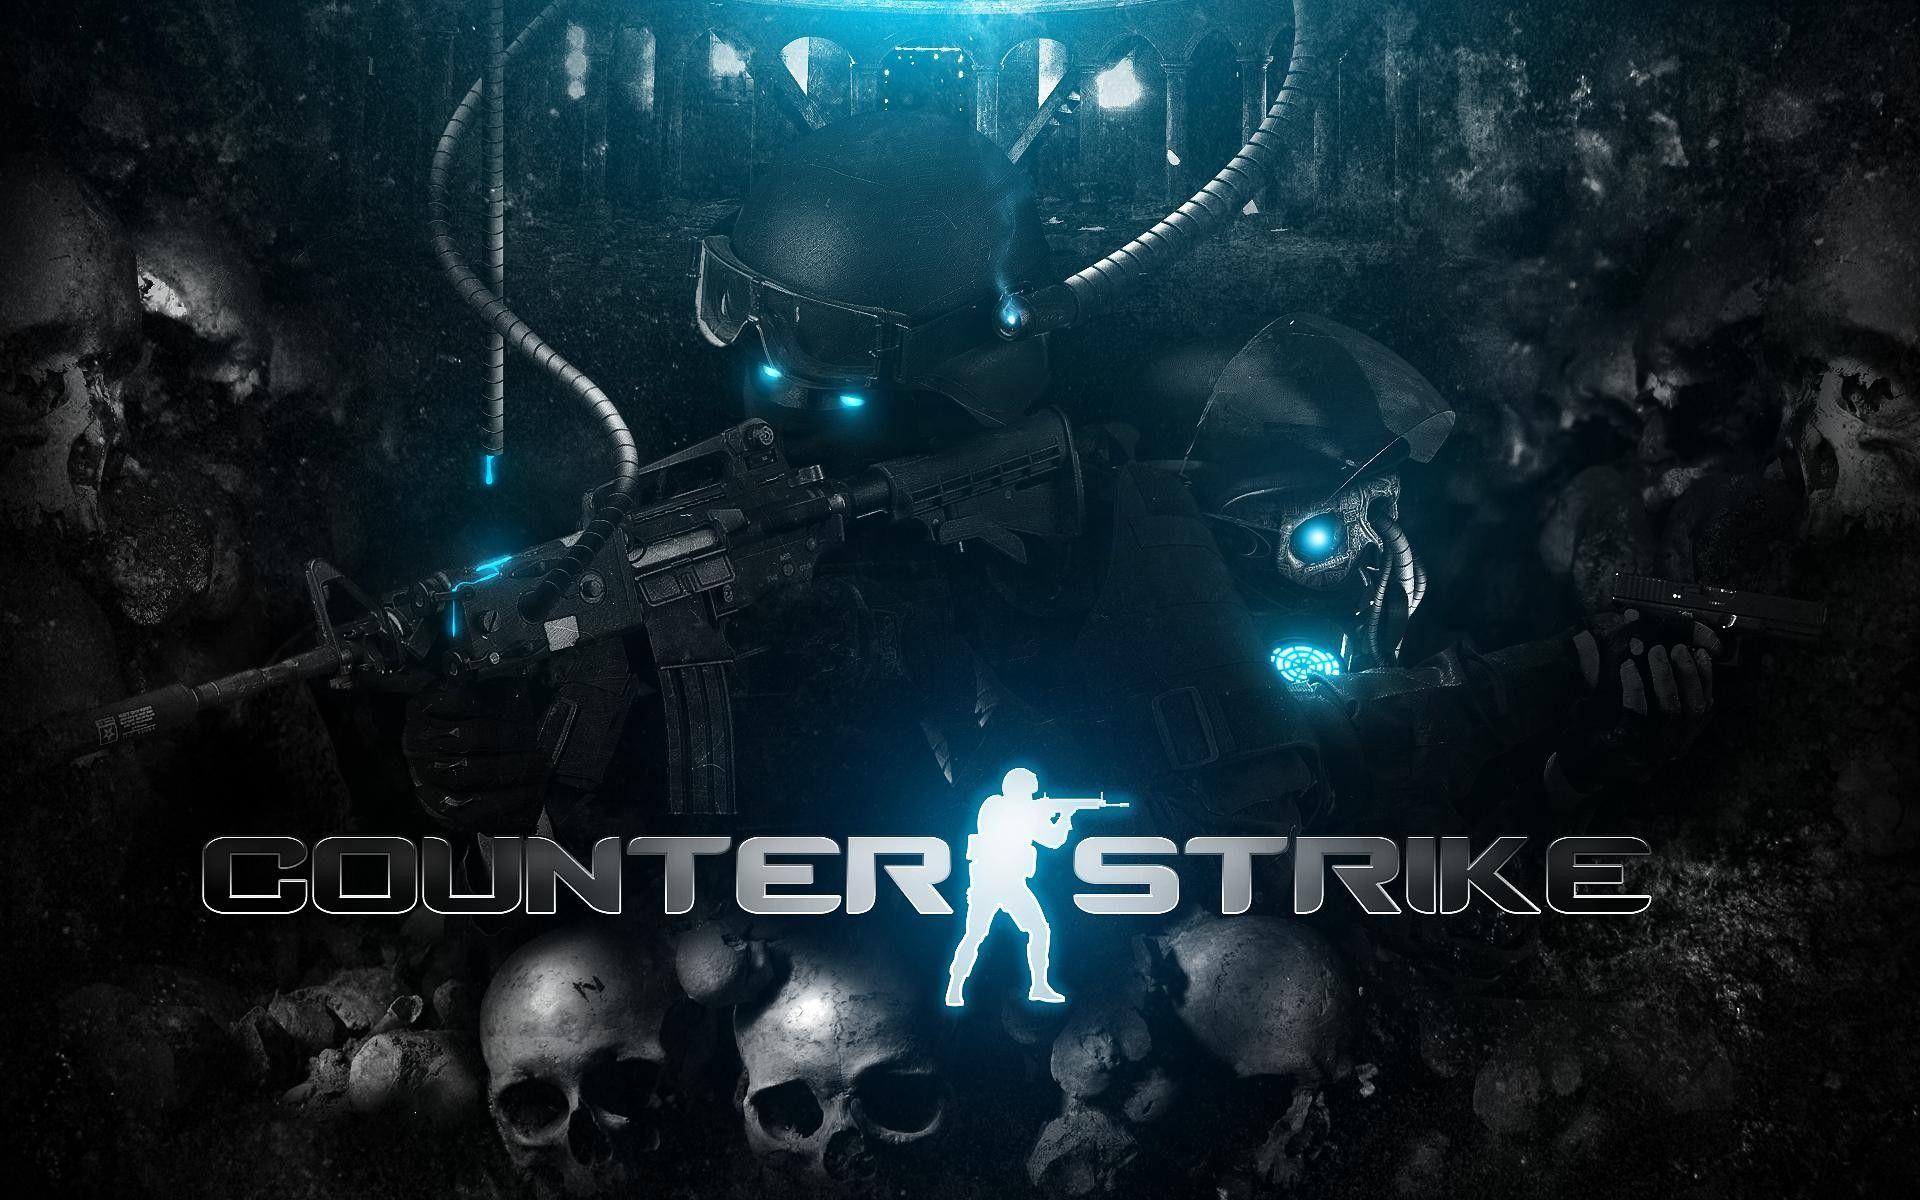 Counter Strike wallpapers ·① Download free beautiful full HD